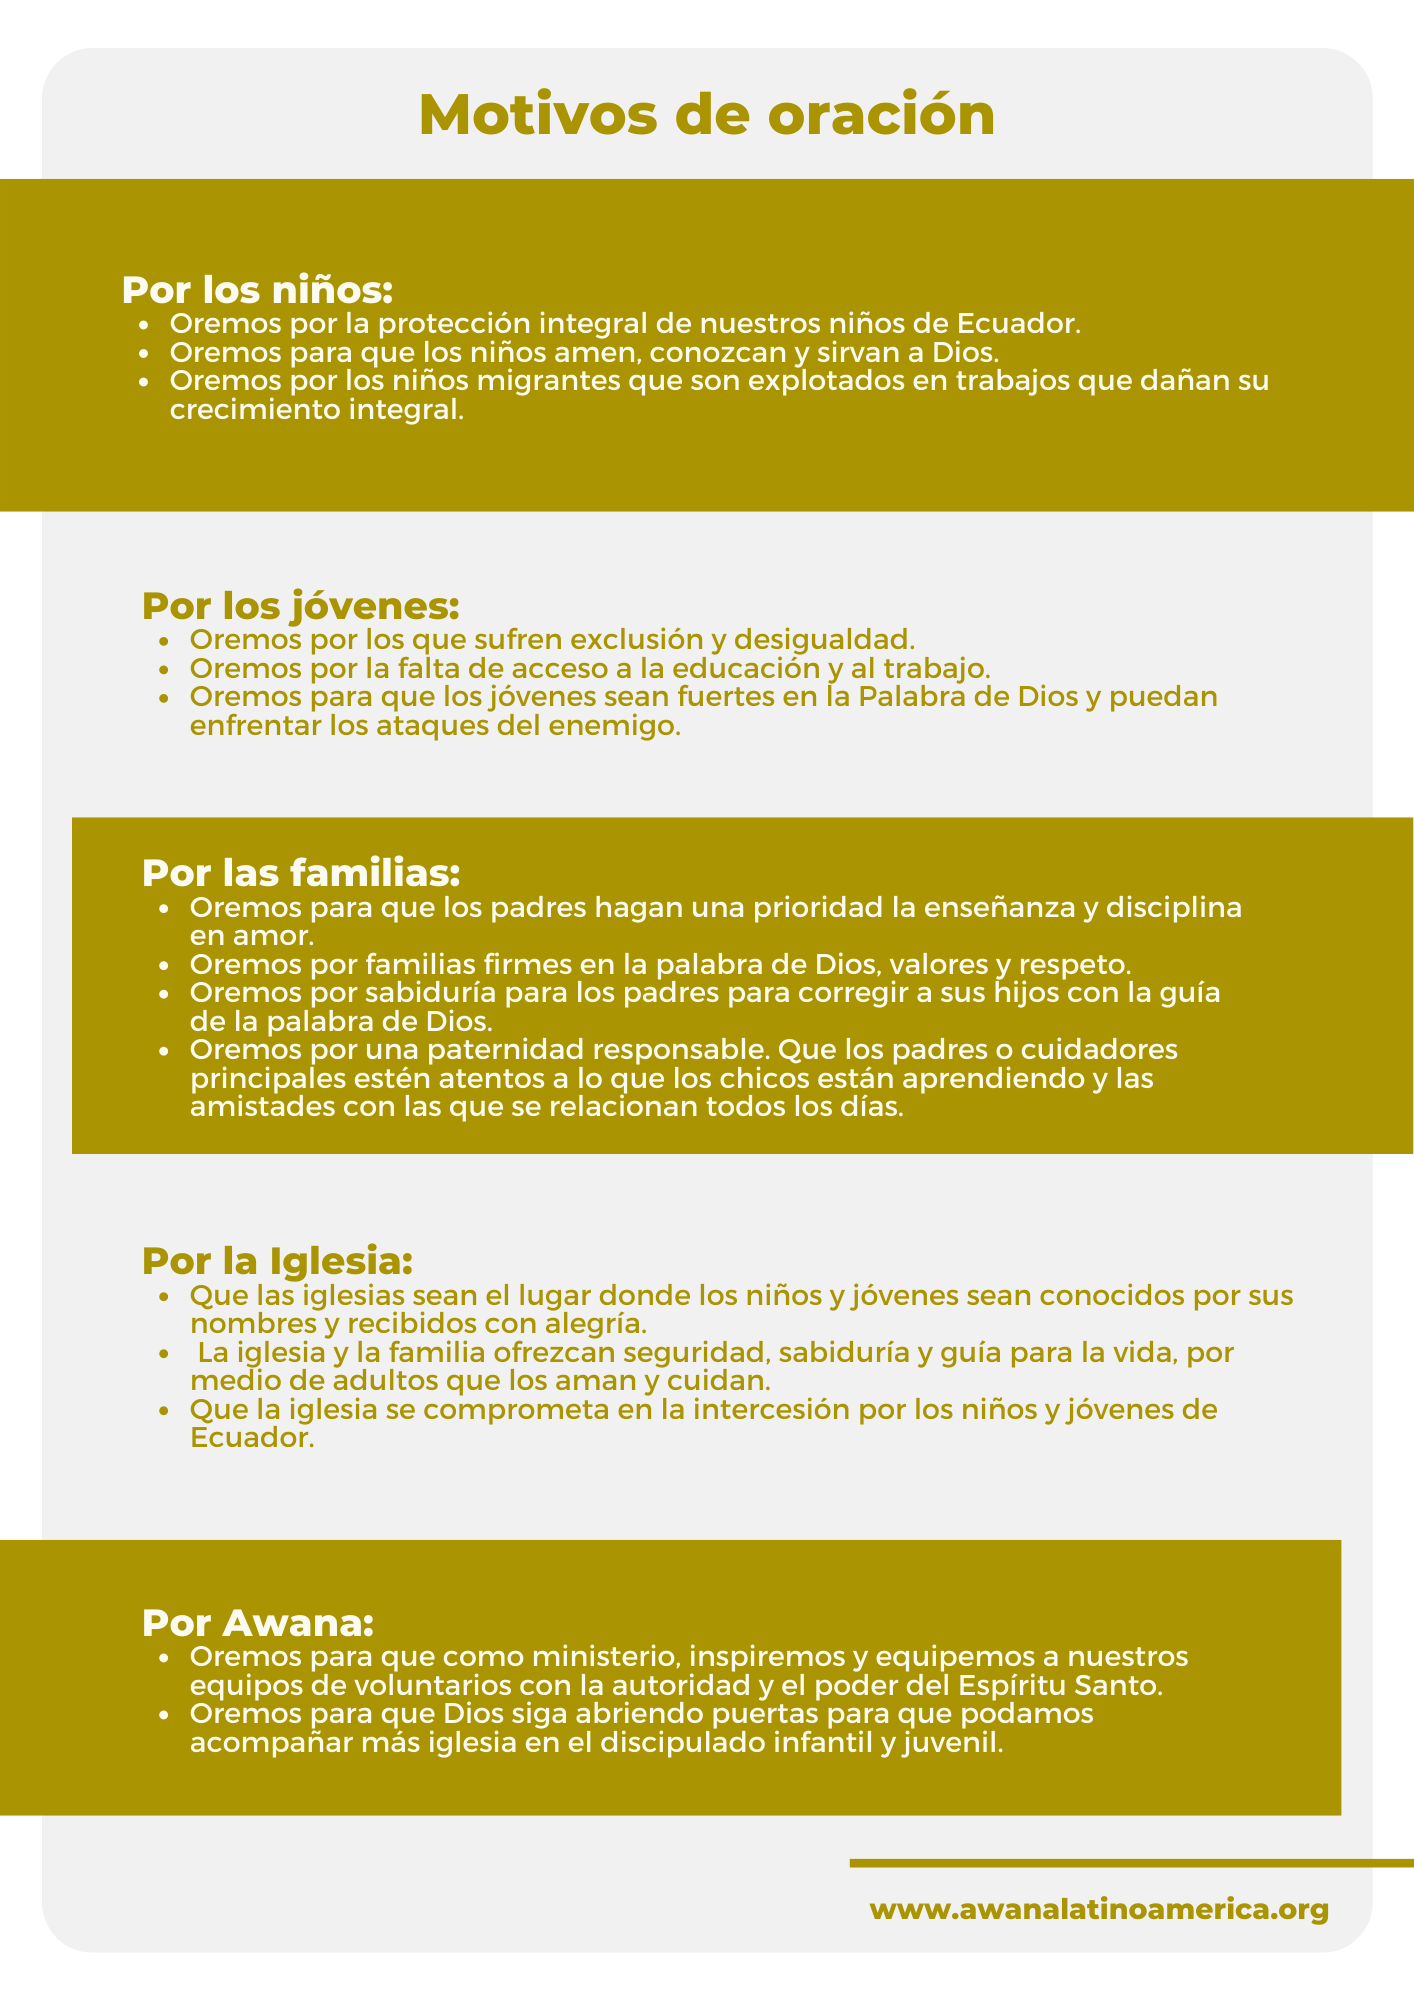 Guía de oración Ecuador (1).png